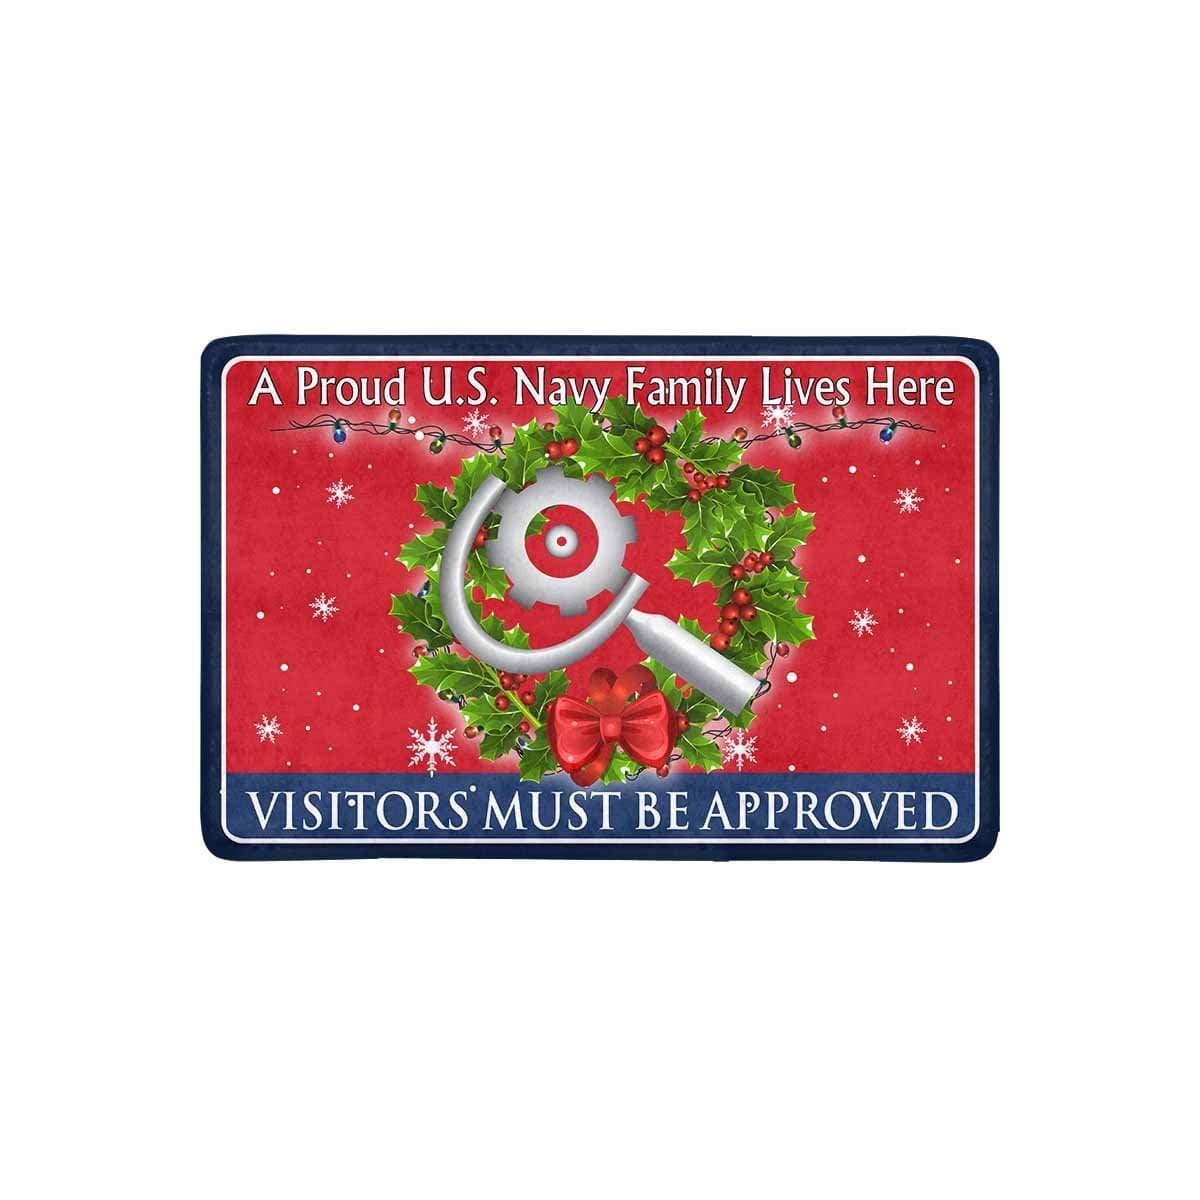 U.S Navy Machinery repairman Navy MR - Visitors must be approved - Christmas Doormat-Doormat-Navy-Rate-Veterans Nation